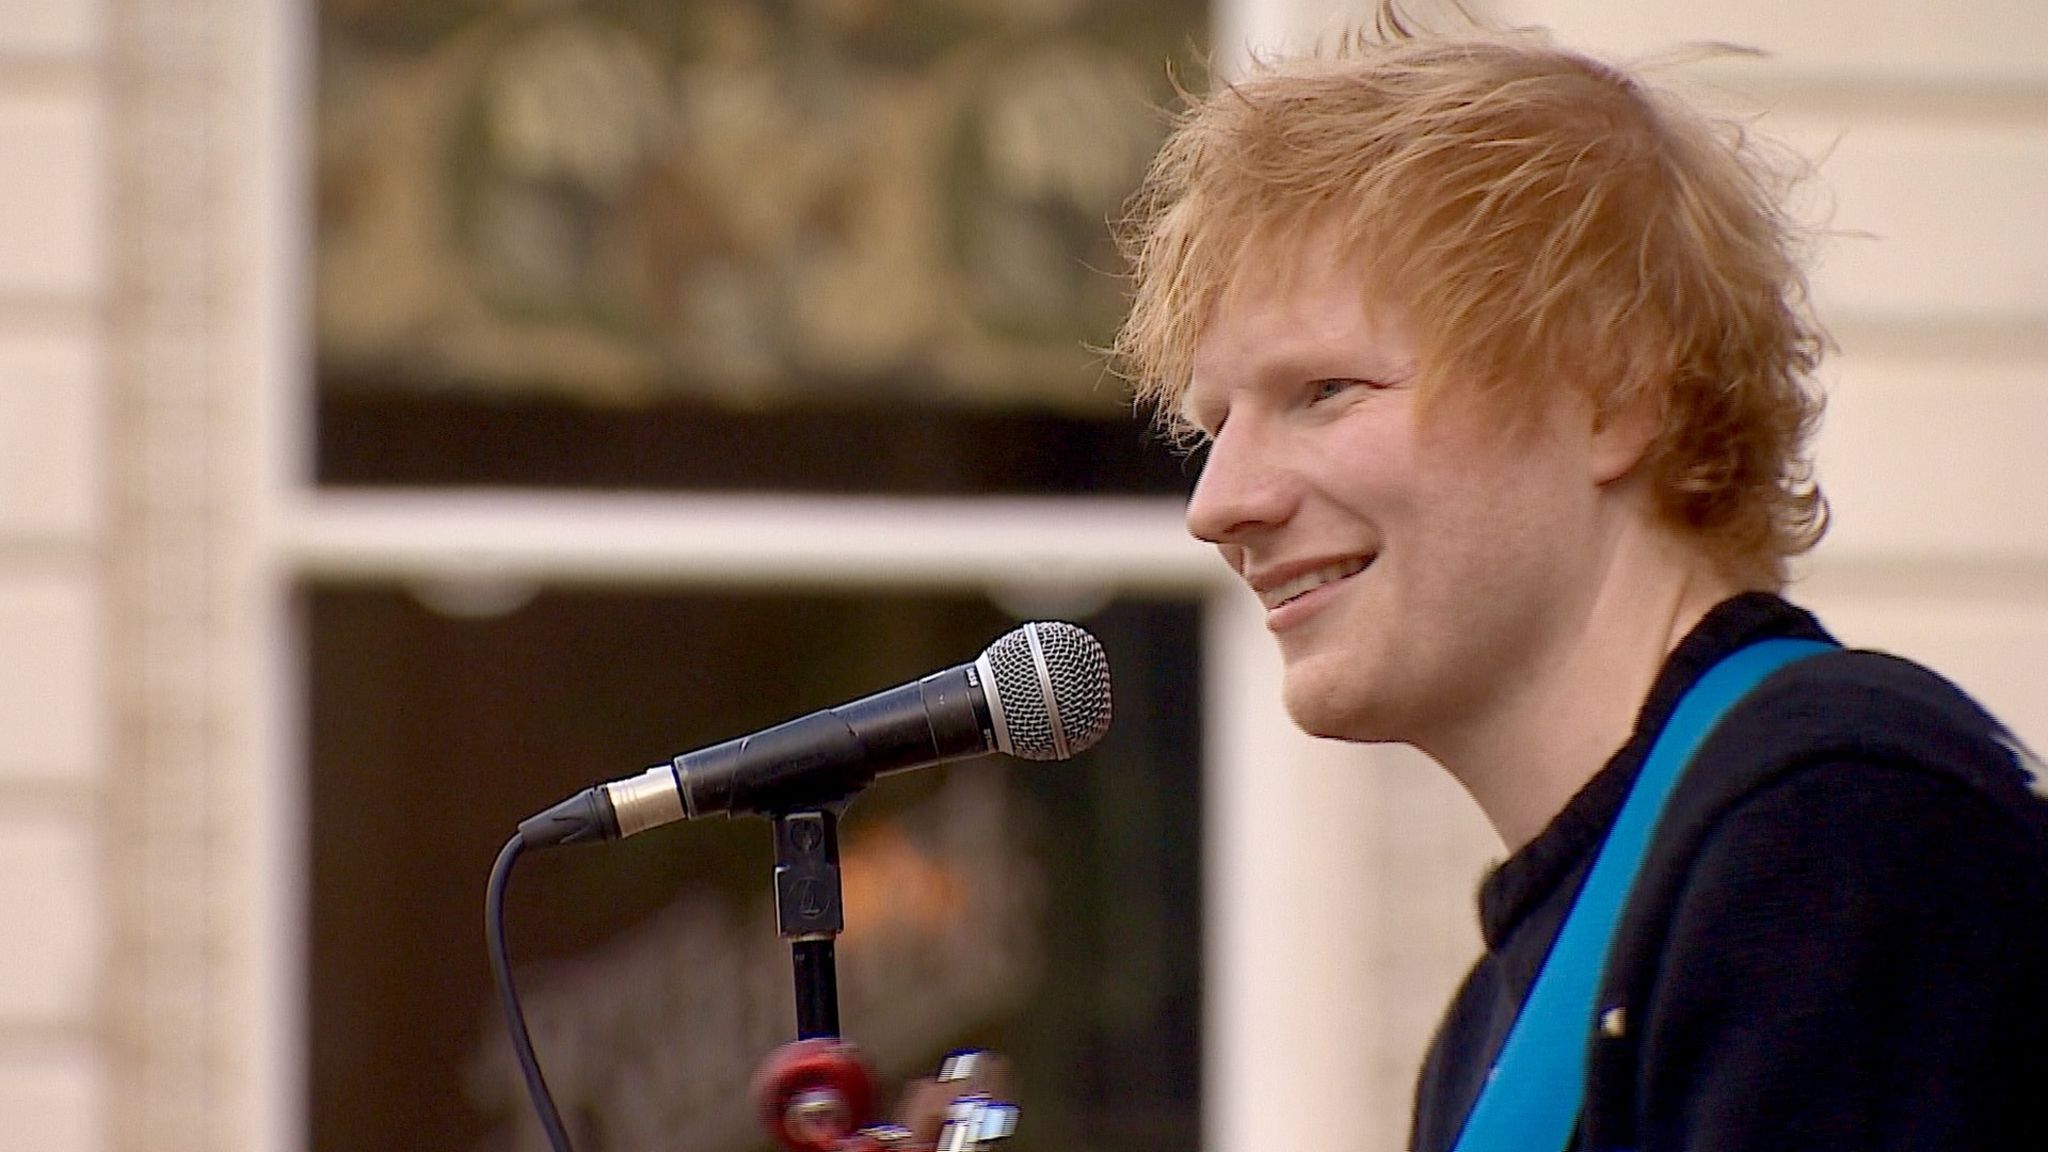 Ed Sheeran singing in Ipswich town centre